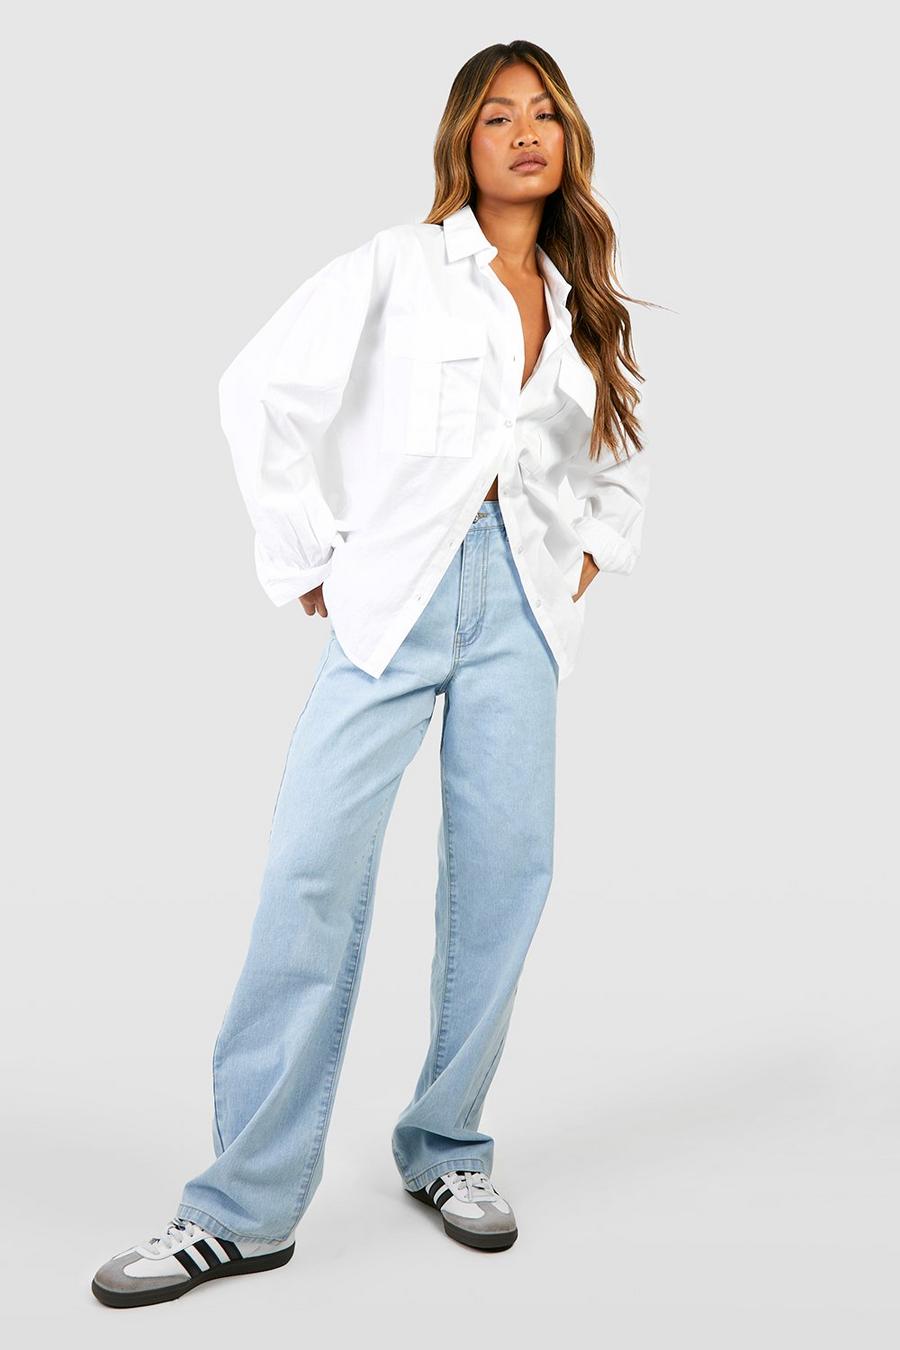 Vintage Plus Size Baggy Boyfriend Jeans For Women High Waist Jeans Spring  Summer 2019 Thin Woman Elasticity Denim Pants From Hongxigua, $38.08